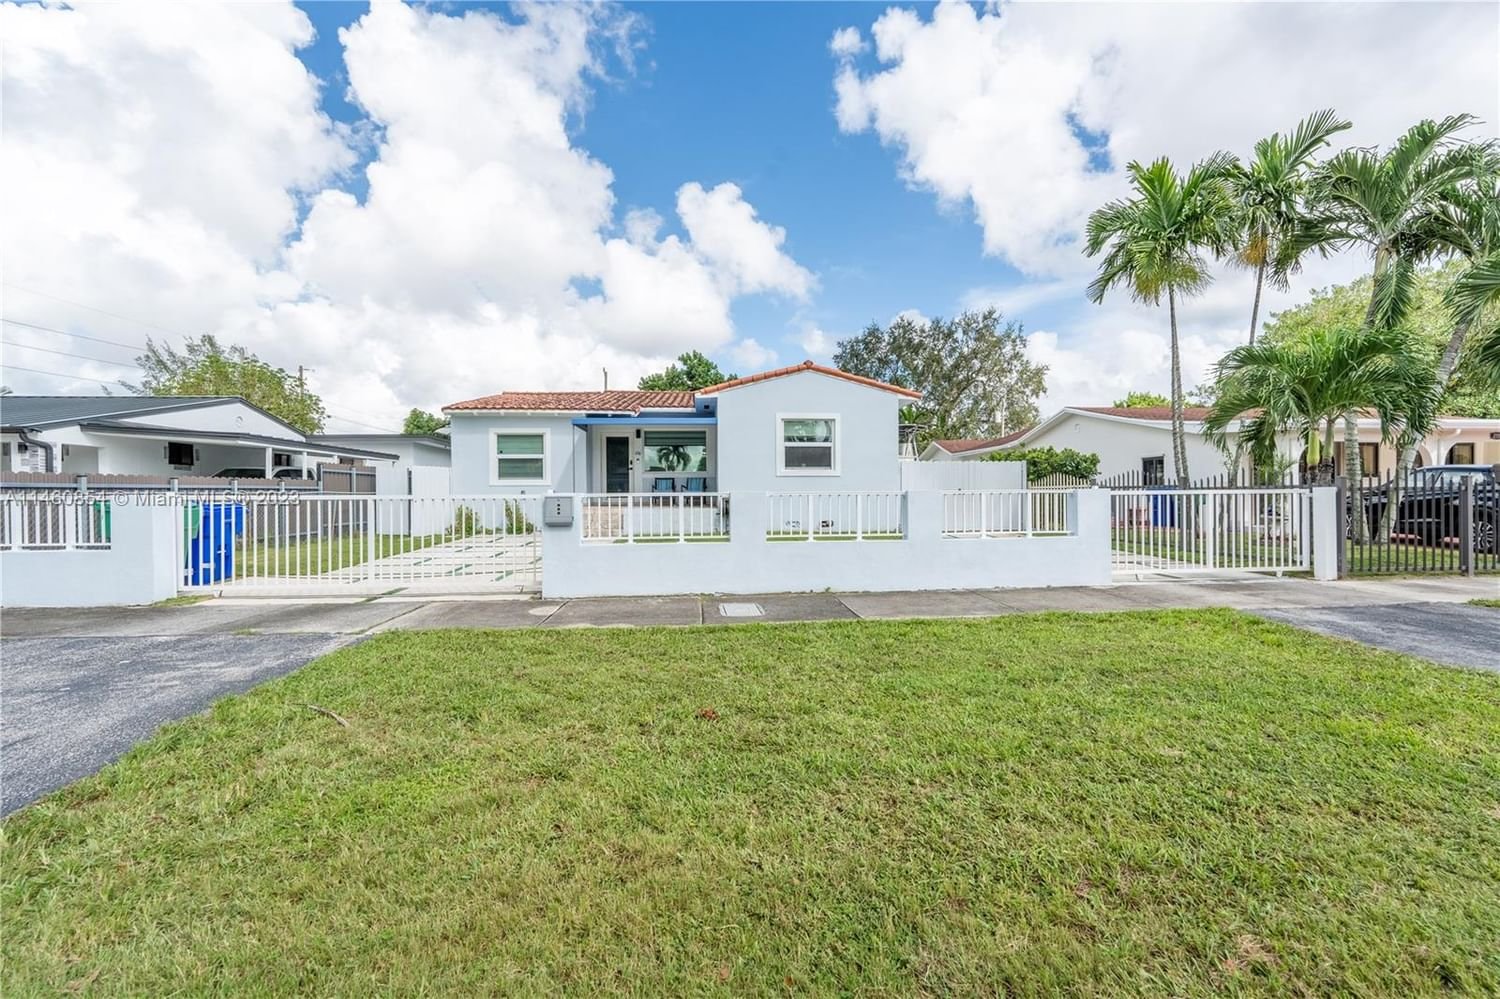 Real estate property located at 265 64th Ct, Miami-Dade County, Miami, FL